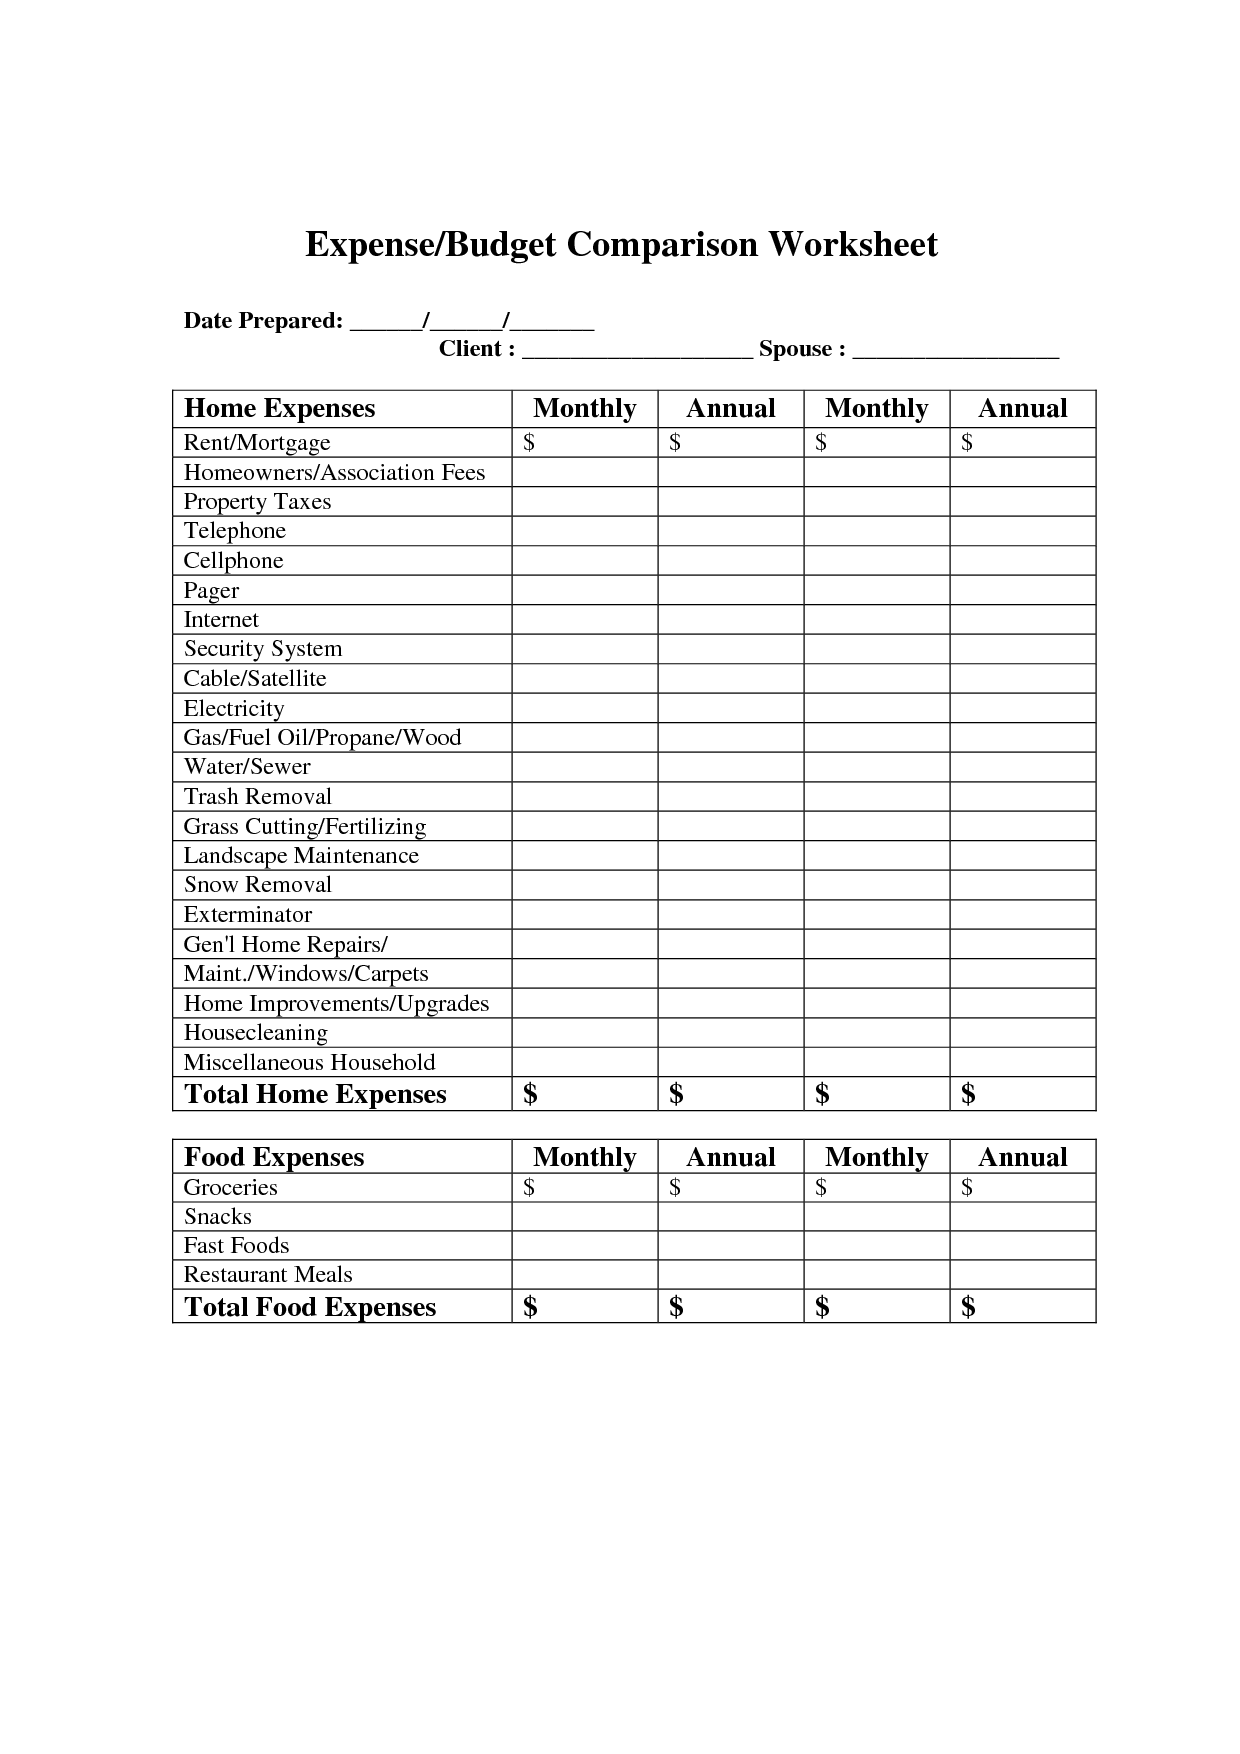 Sample Household Budget Worksheet Image